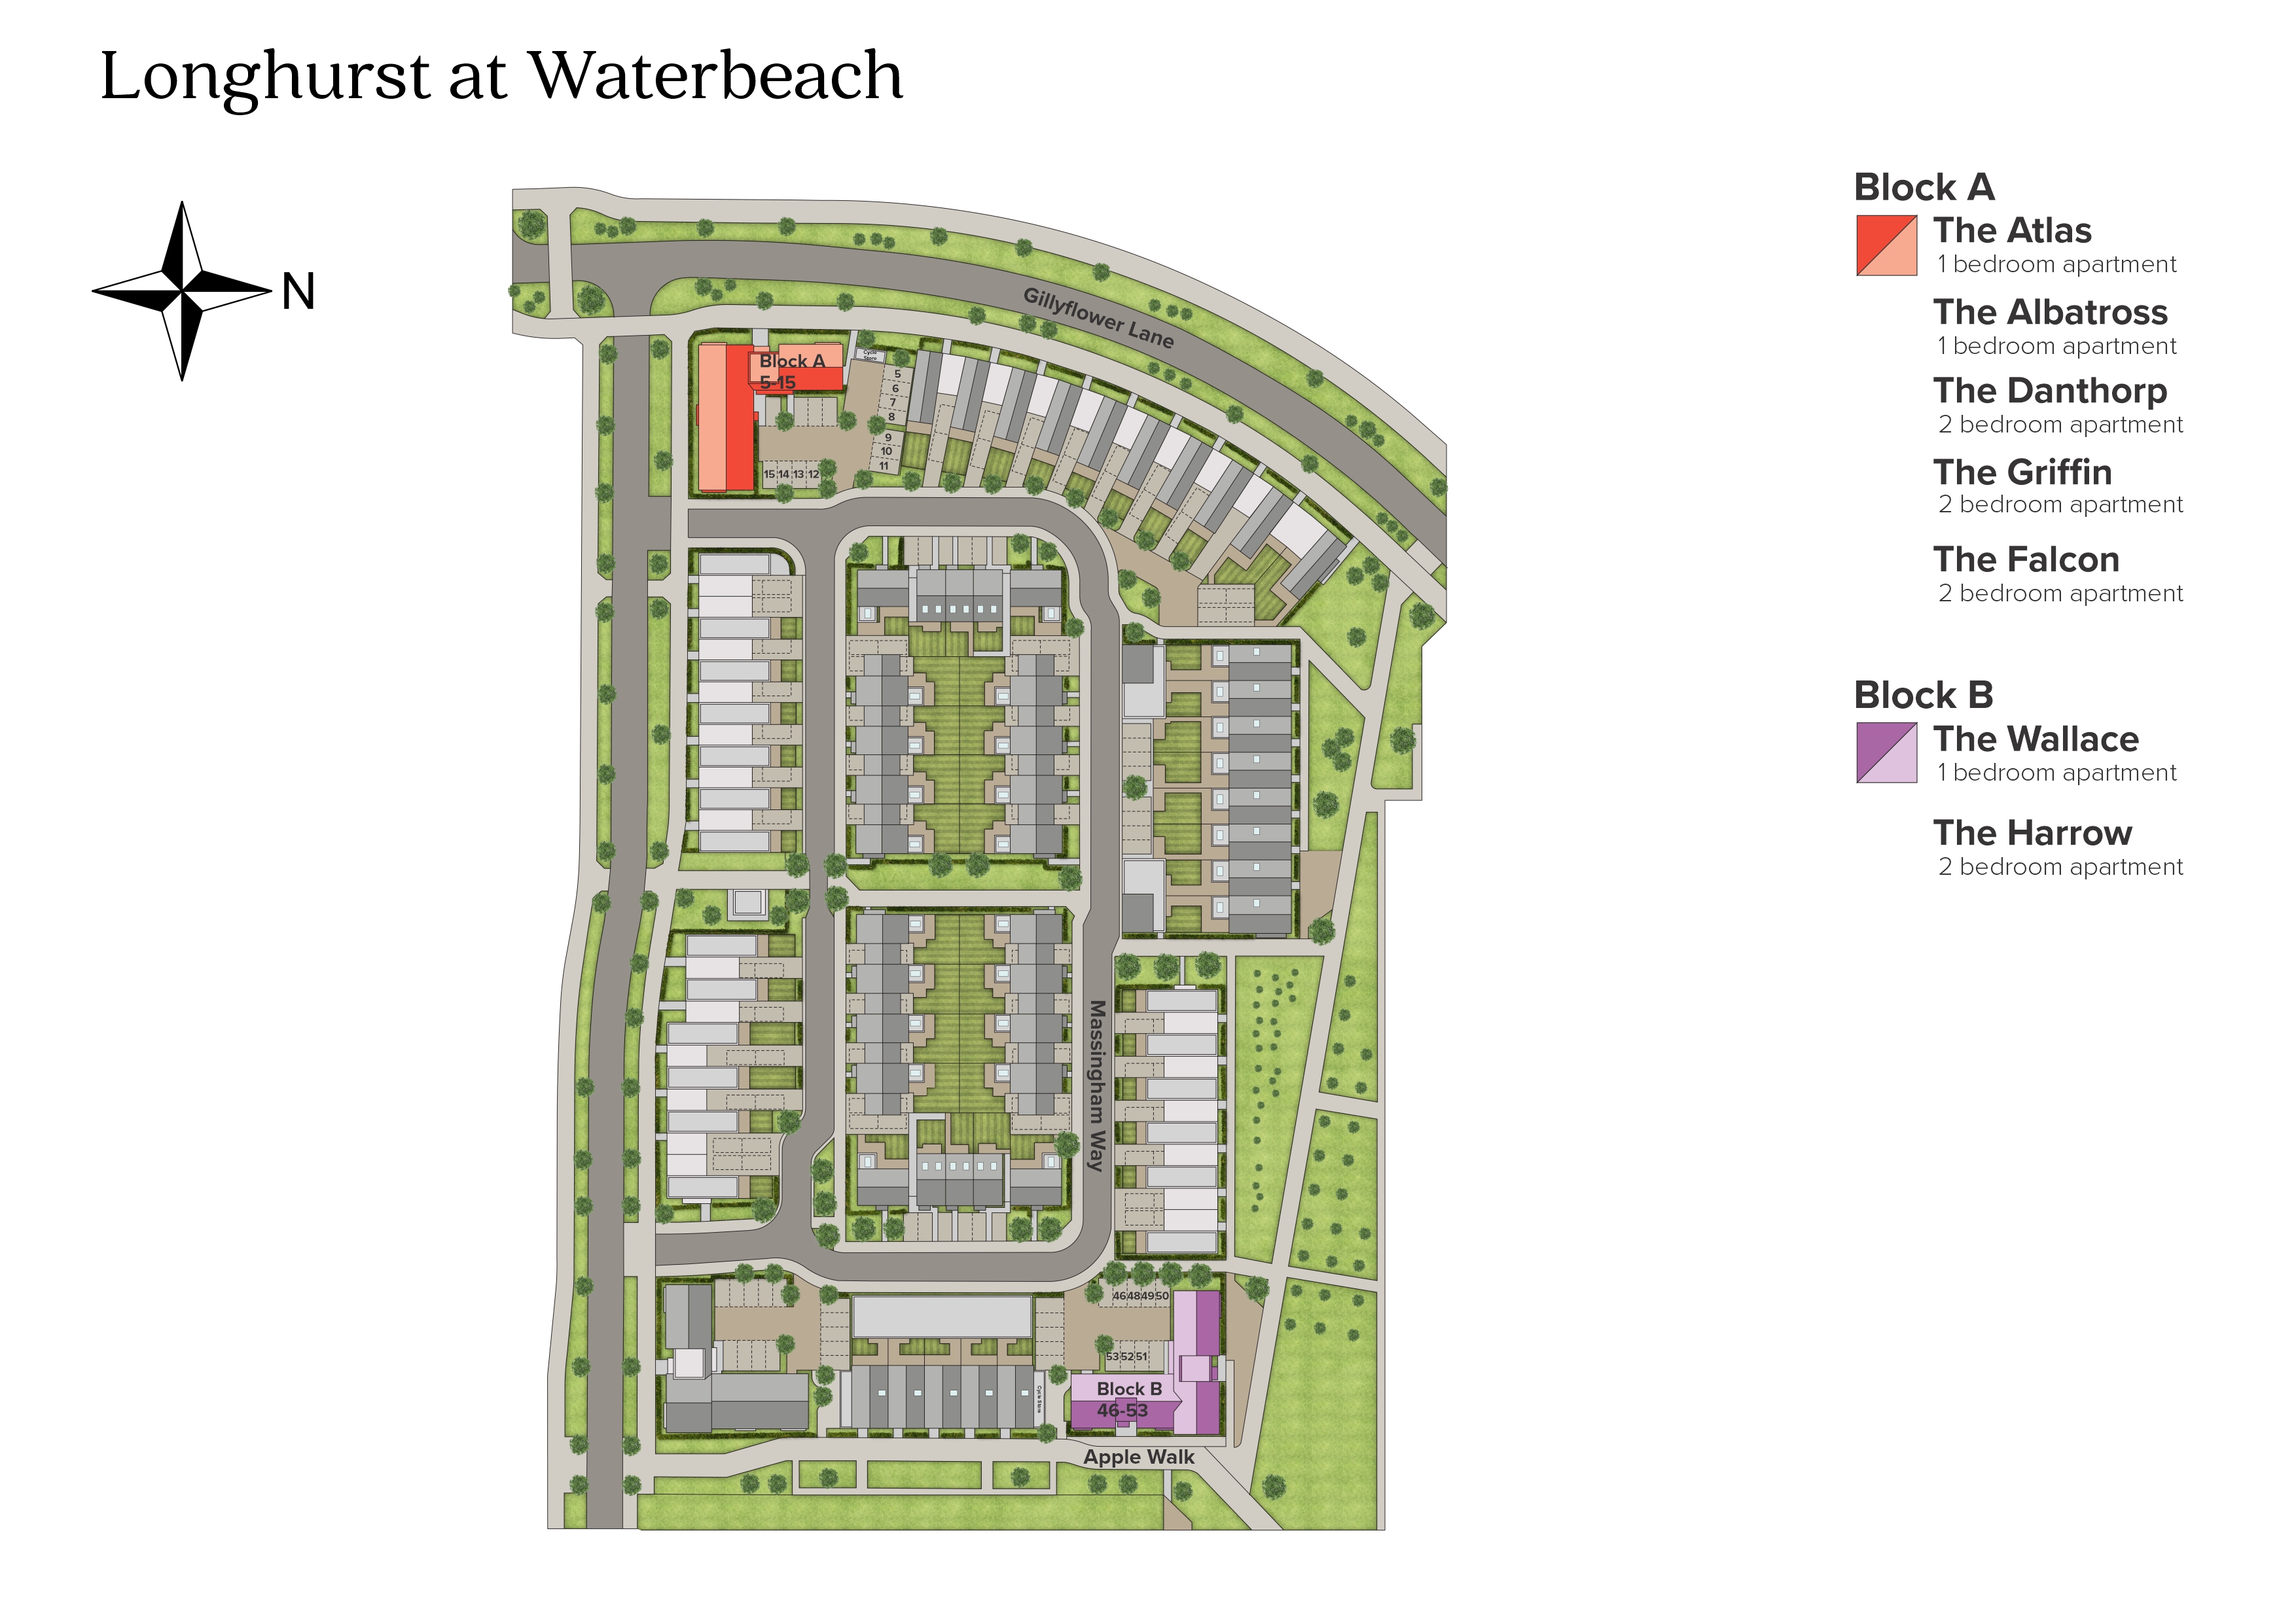 Waterbeach development plan